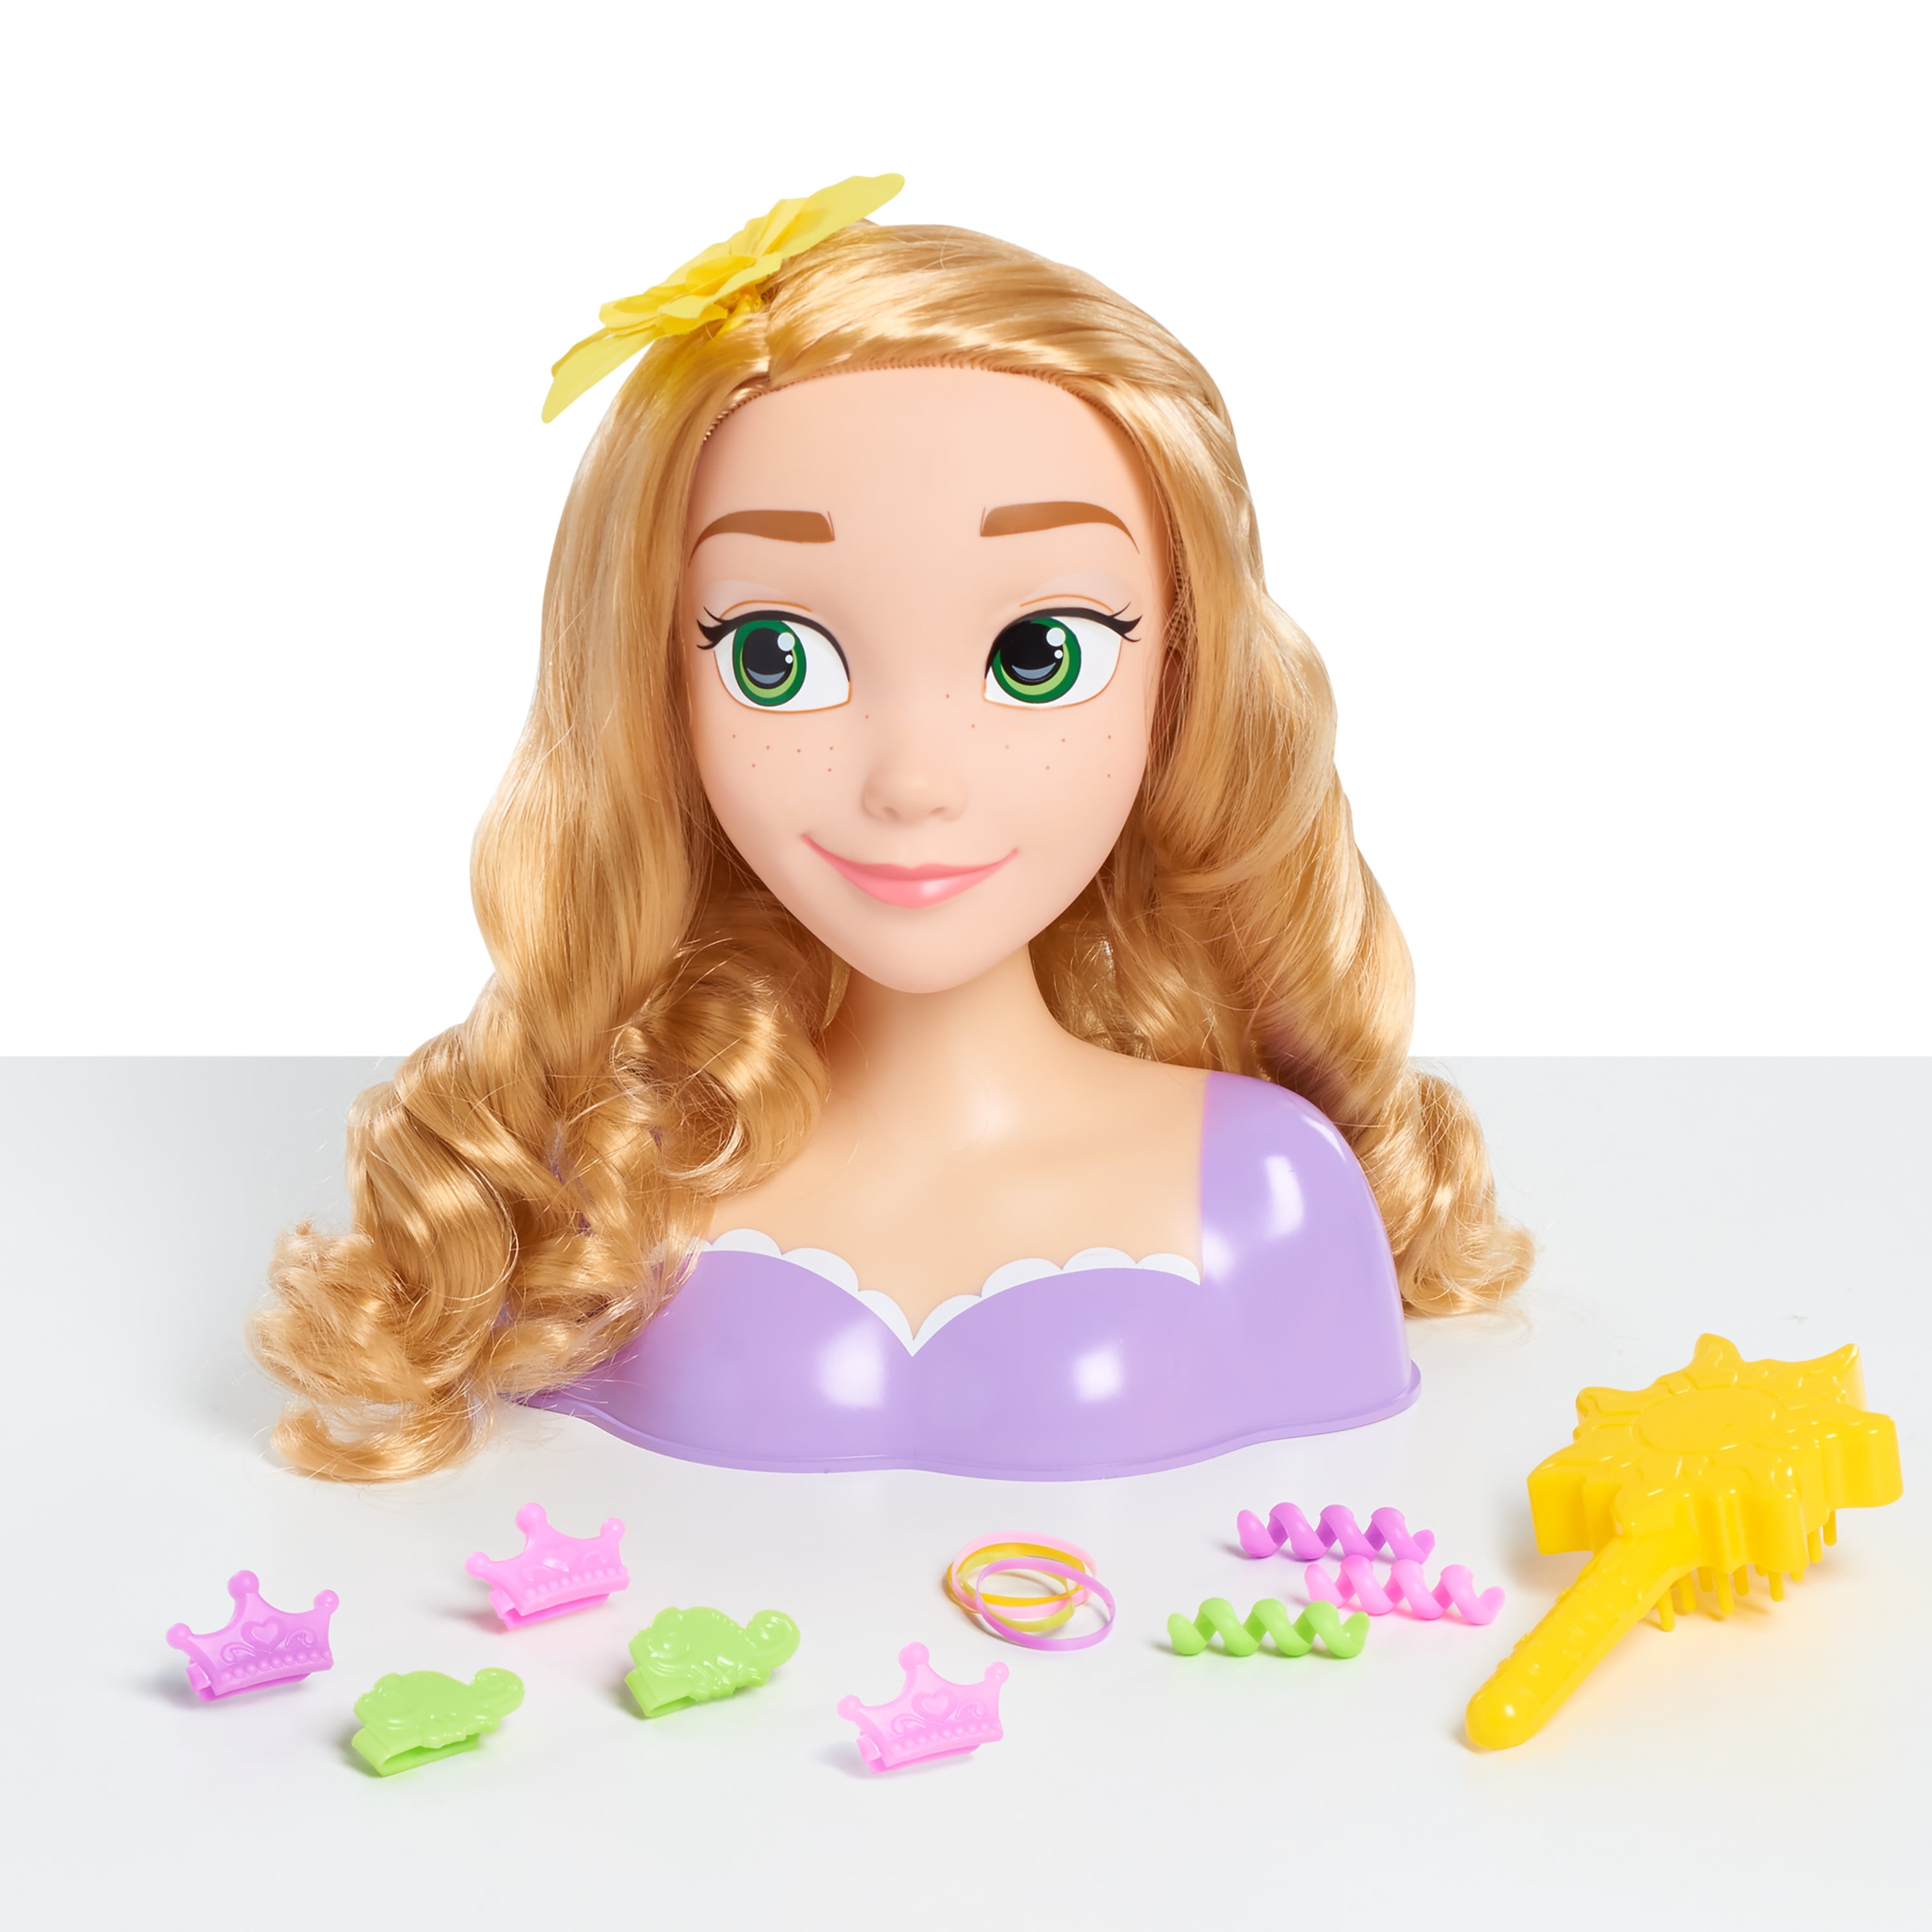 Disney Princess Deluxe Rapunzel Styling Head, 13-Pieces